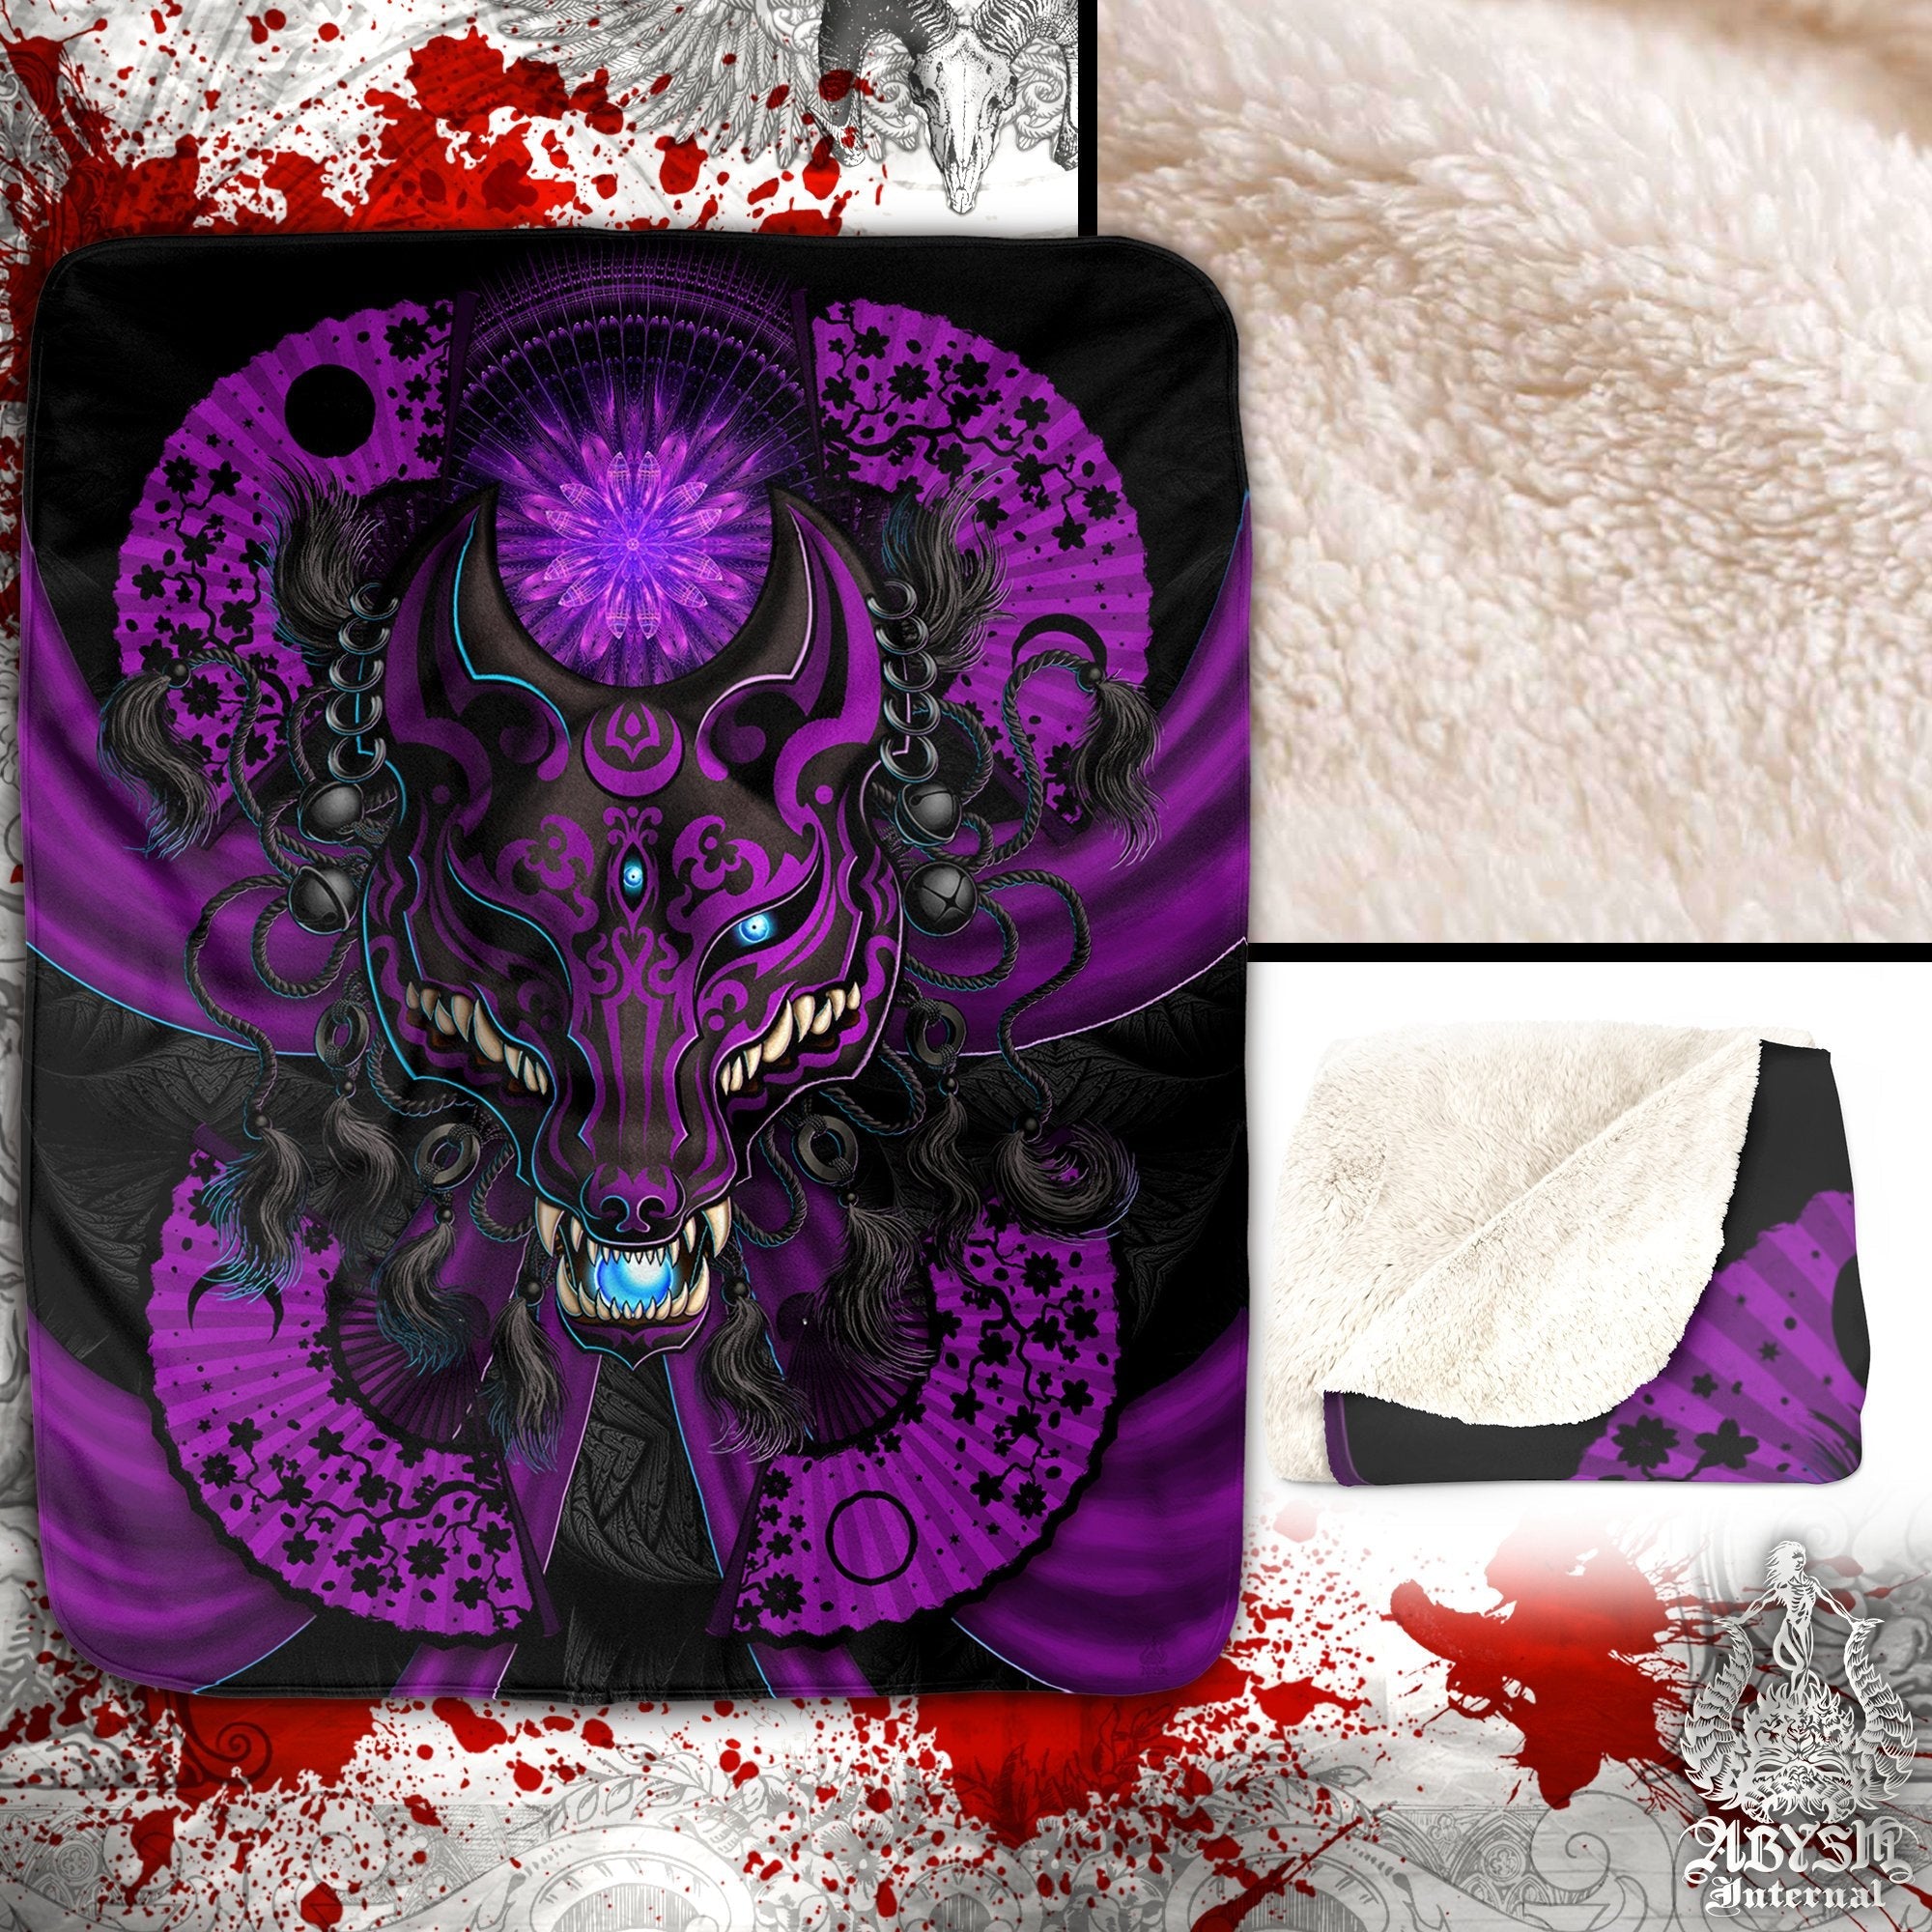 Kitsune Throw Fleece Blanket, Okami, Japanese Fox Mask, Anime and Gamer Decor, Alternative Art Gift - Pastel Goth, Black & Purple - Abysm Internal